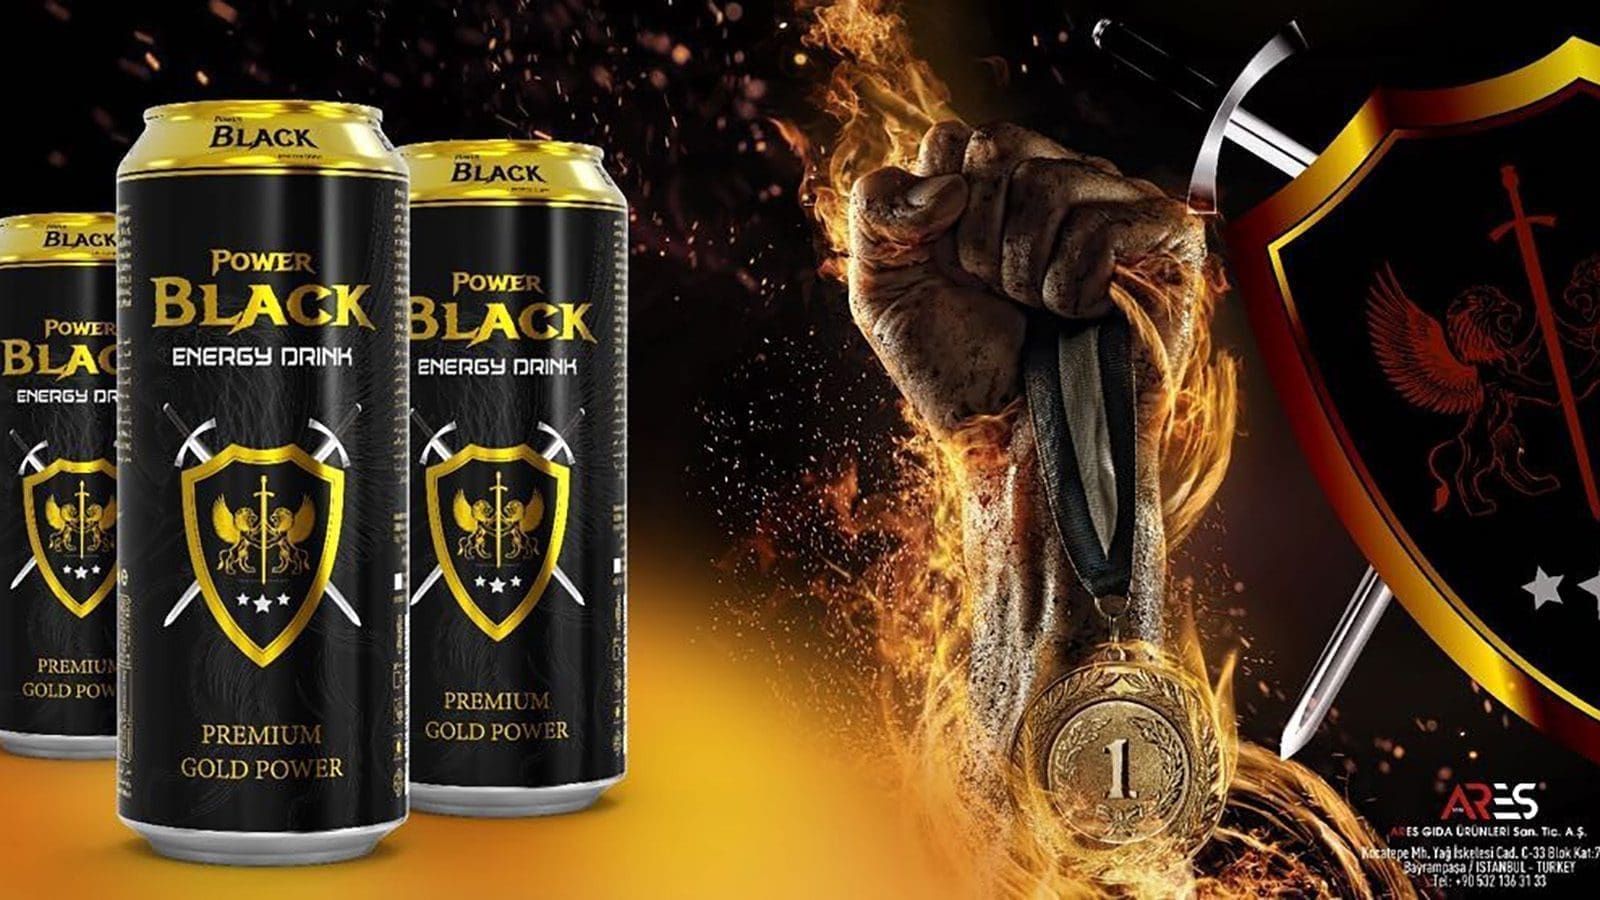 Turkish energy drink brand Power Black makes entry into Nigerian market